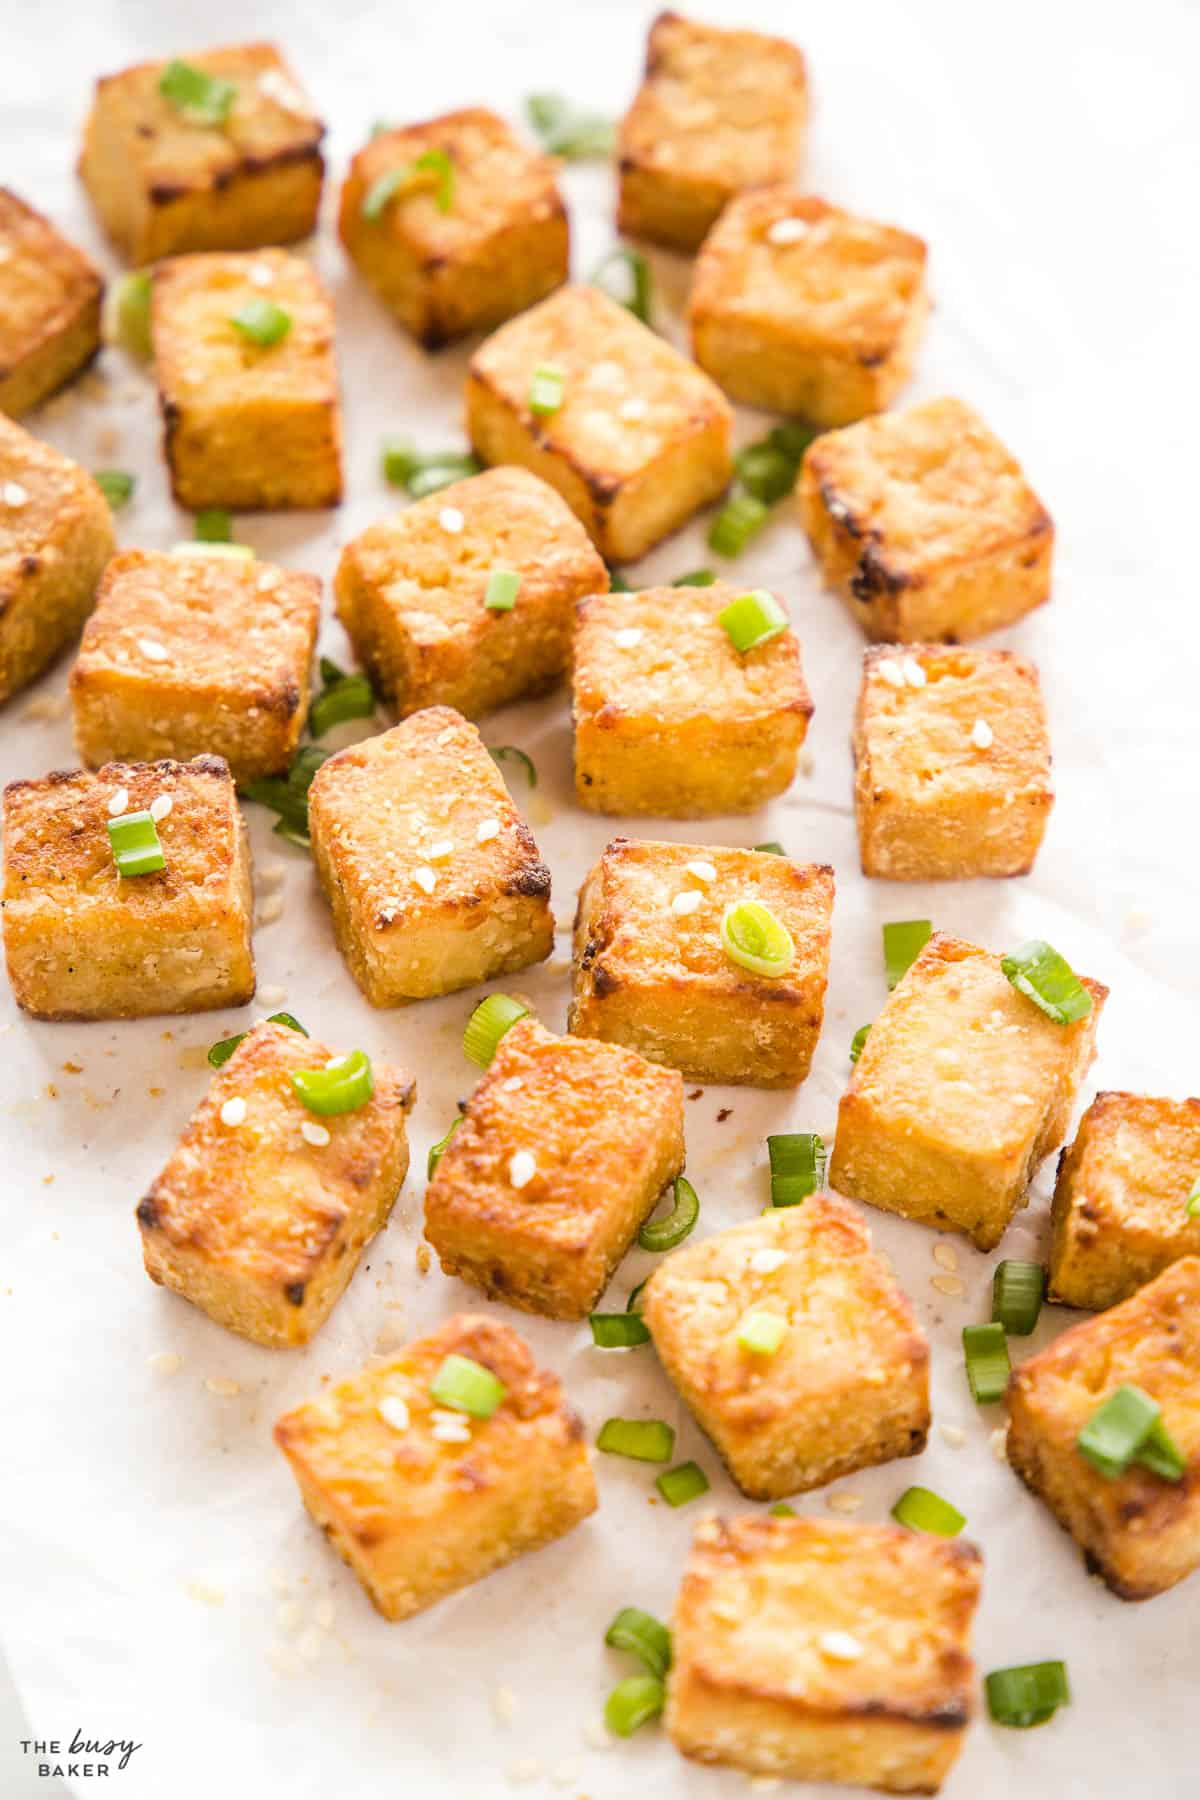 cubes of tofu with crispy cornstarch coating